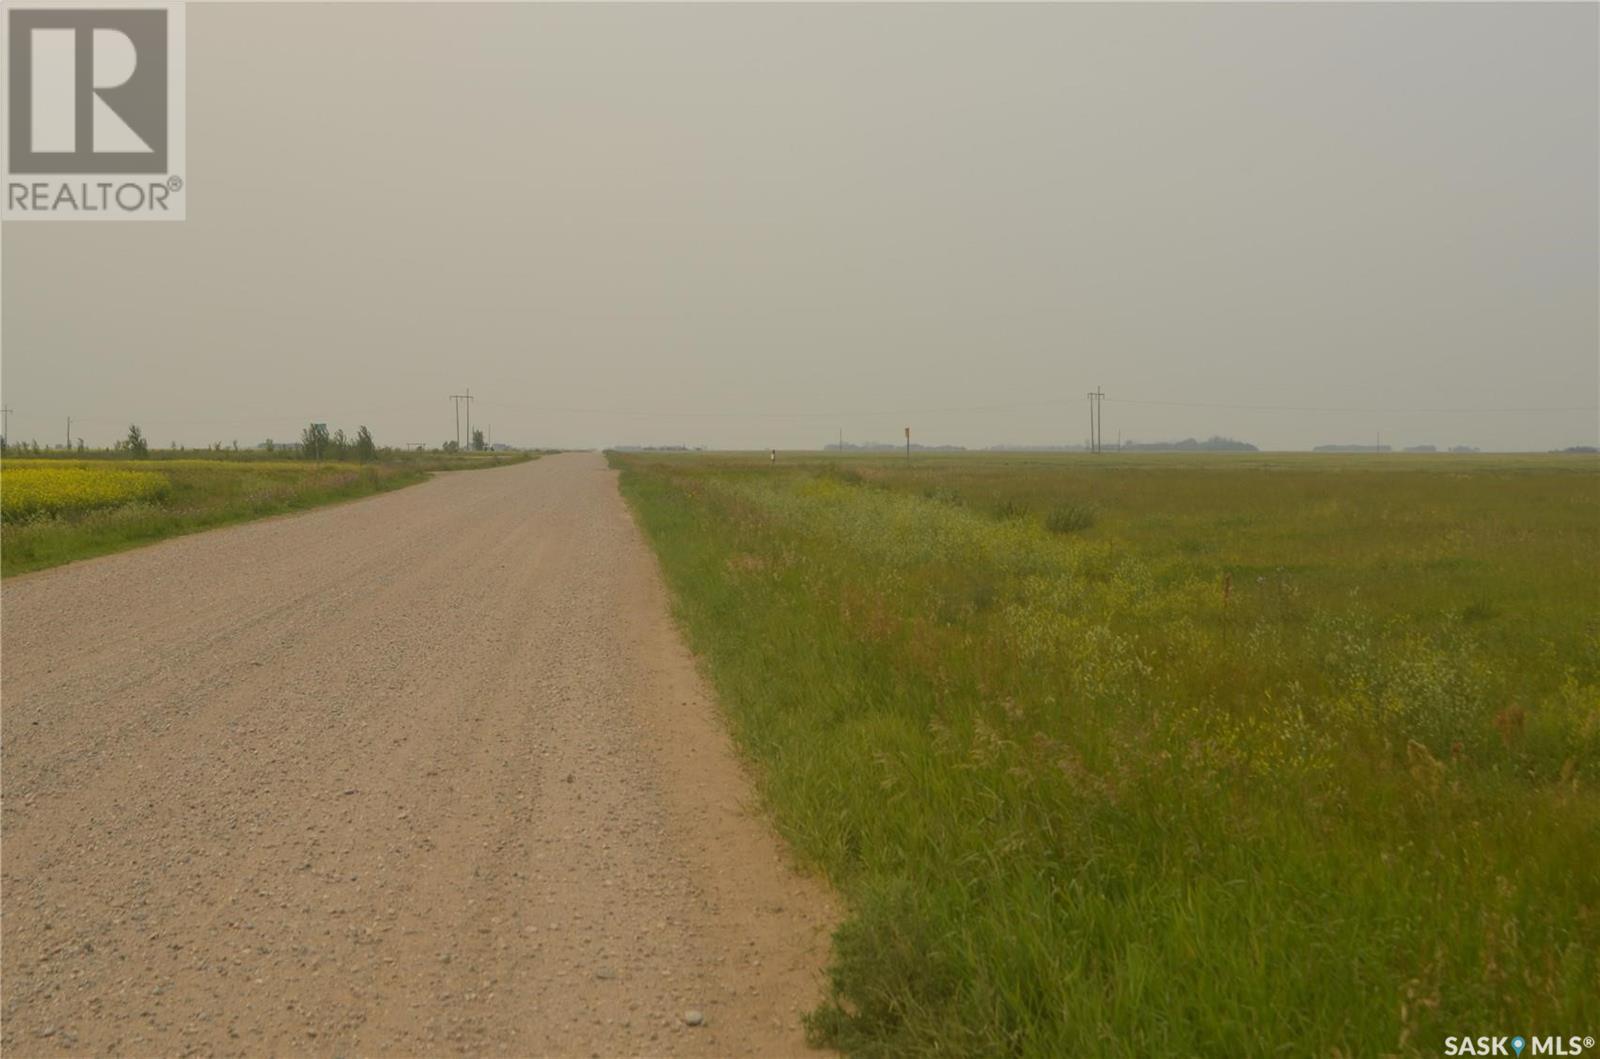 Saskatoon NW Farmland Lot D, corman park rm no. 344, Saskatchewan